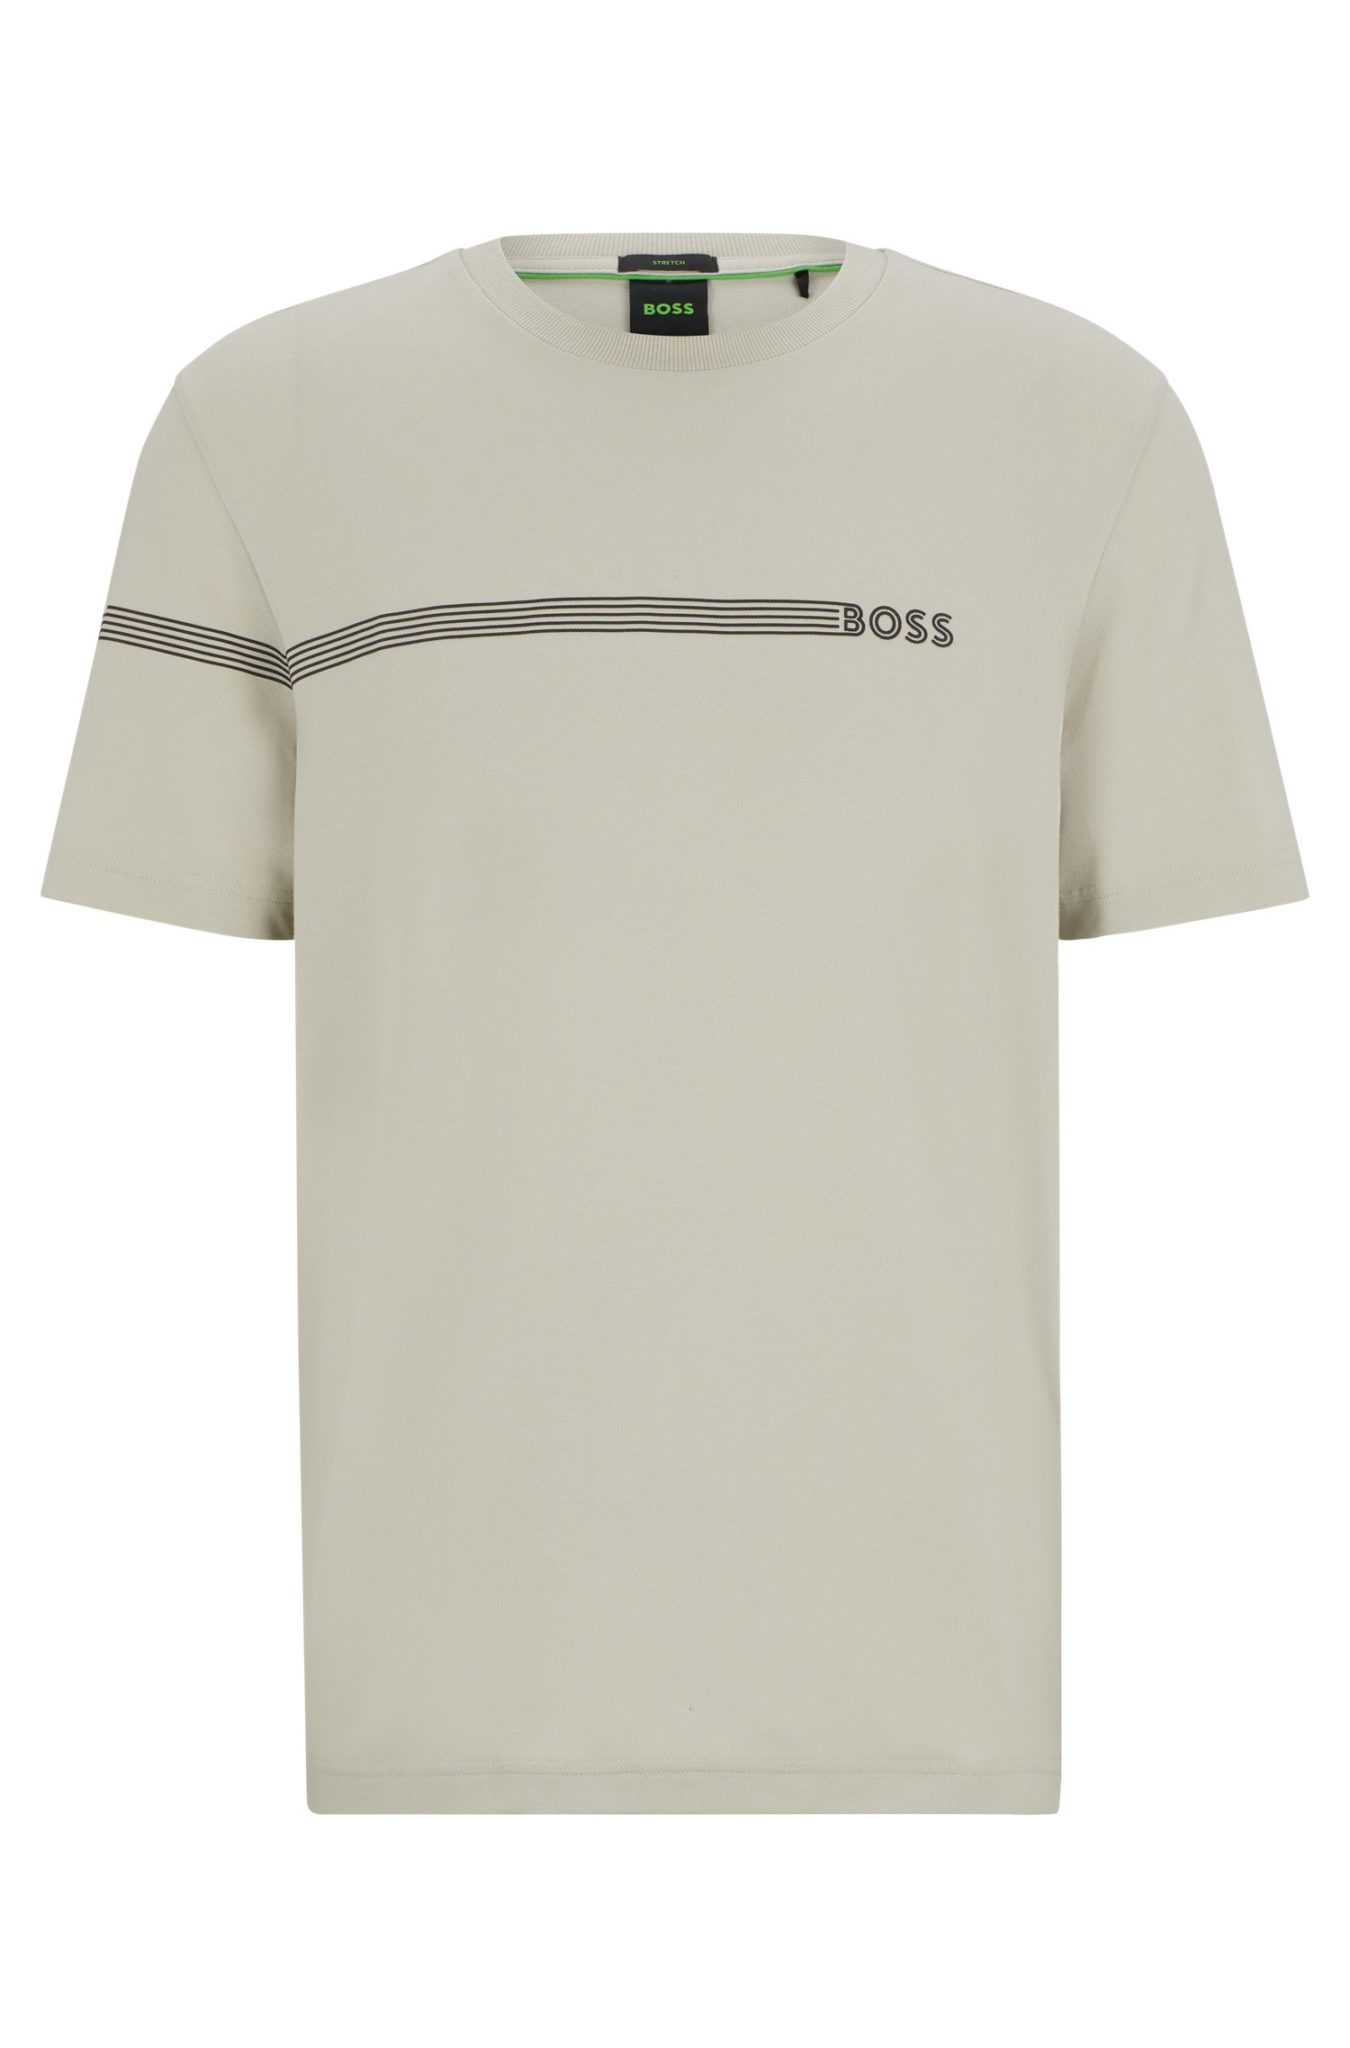 Hugo Boss T-shirt en coton mélangé avec rayures et logo